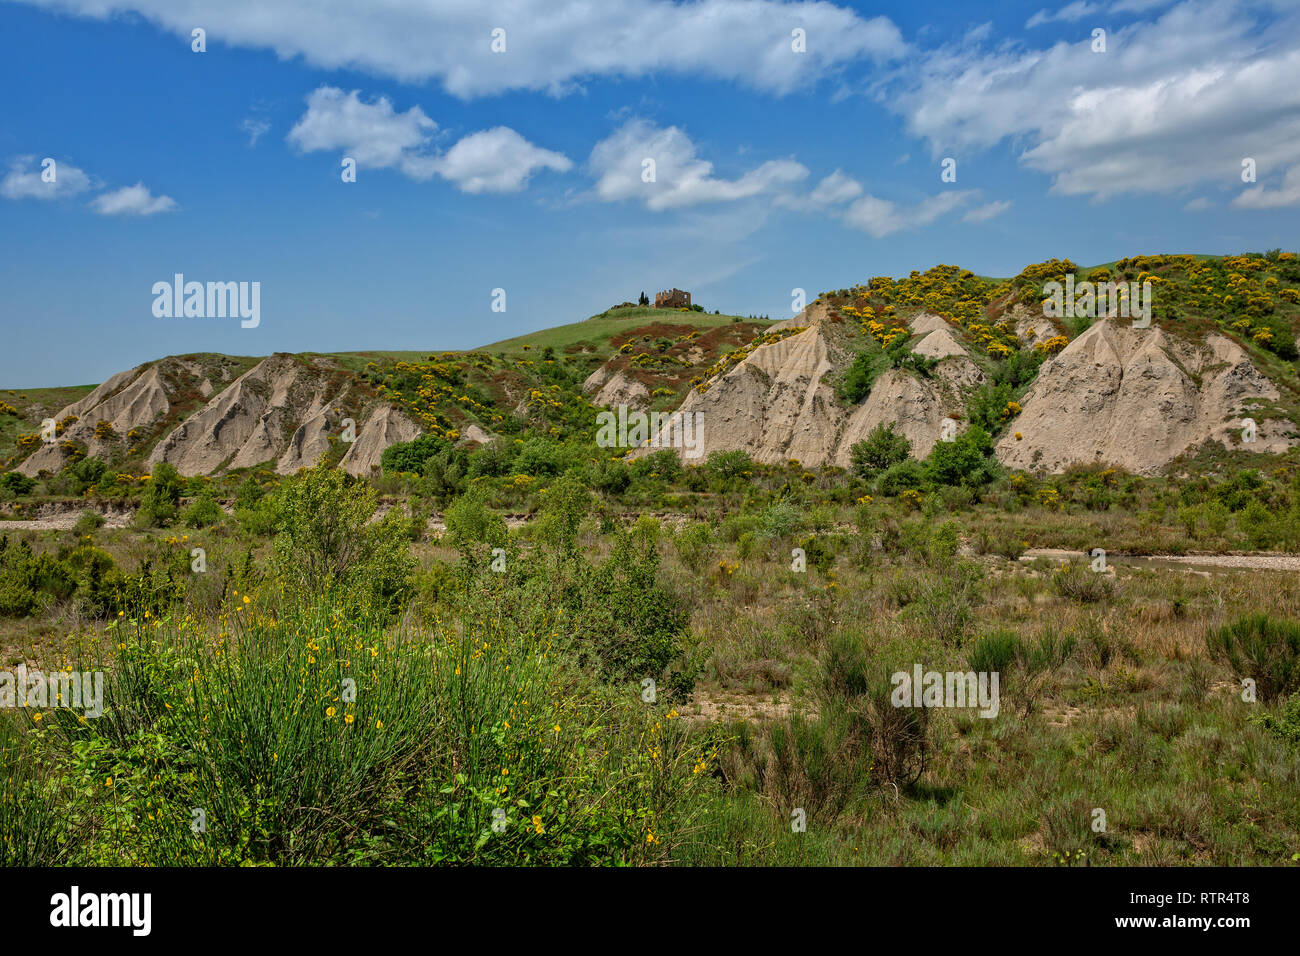 View of the Crete Senesi country landscape with a old ruin. Crete Senesi landscape erosion forms of Calanchi near Siena, Tuscany, Italy Stock Photo